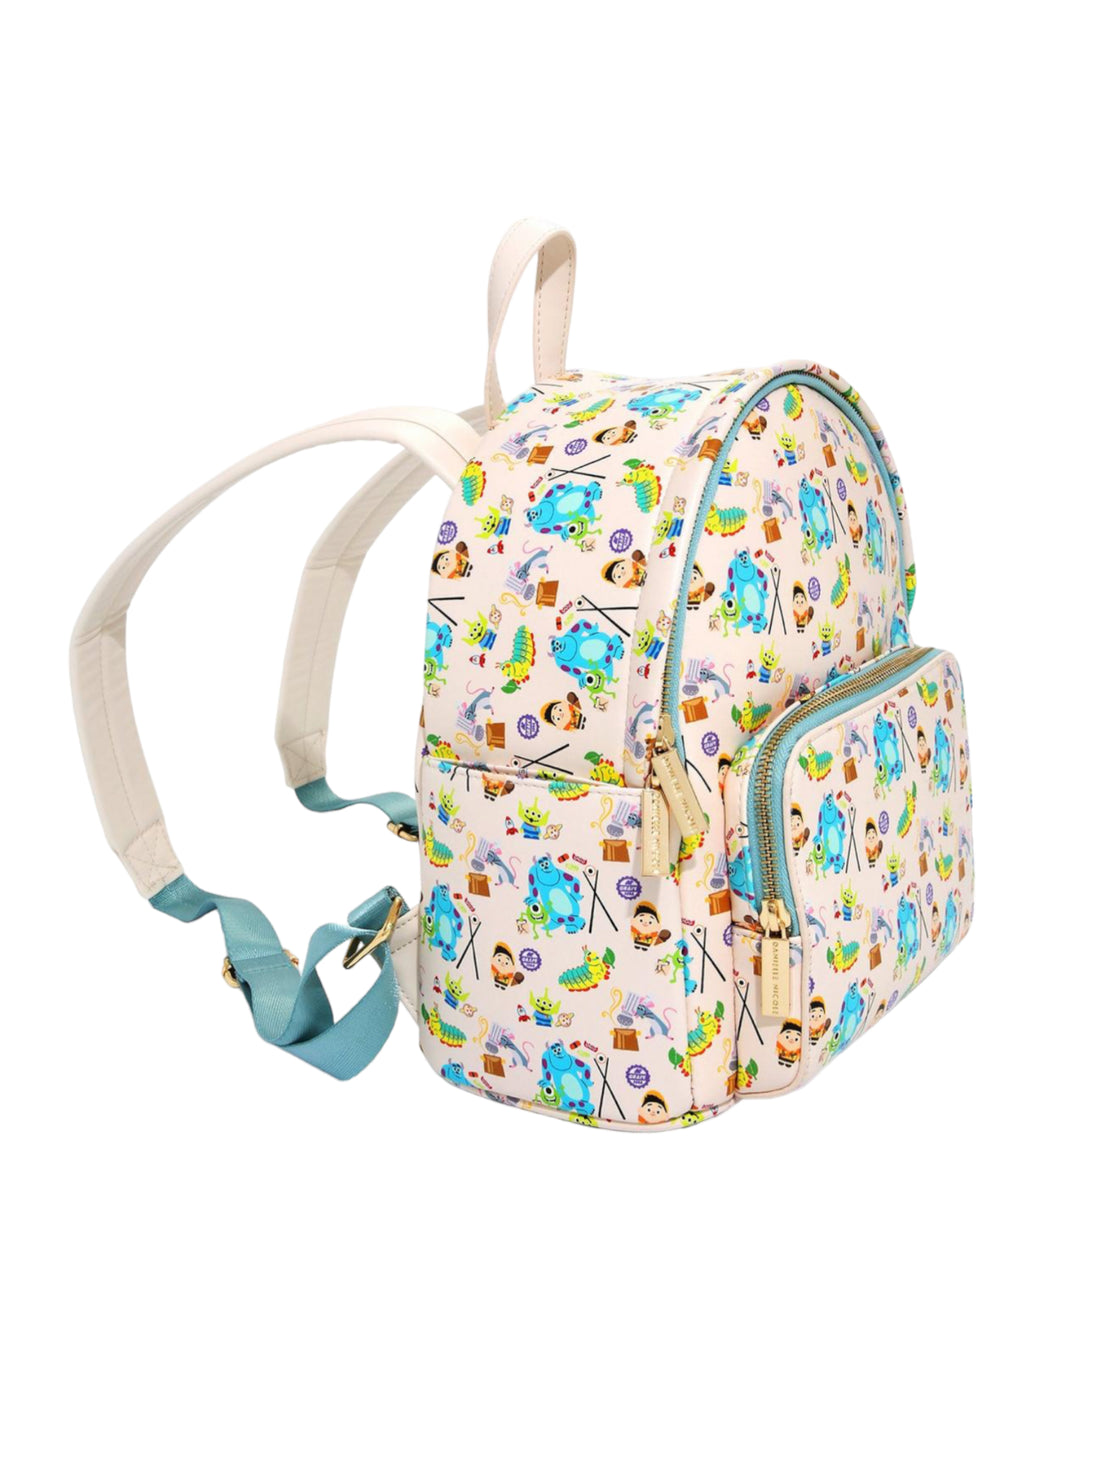 Disney - Danielle Nicole - Pixar Food Mini Backpack - BoxLunch Exclusive